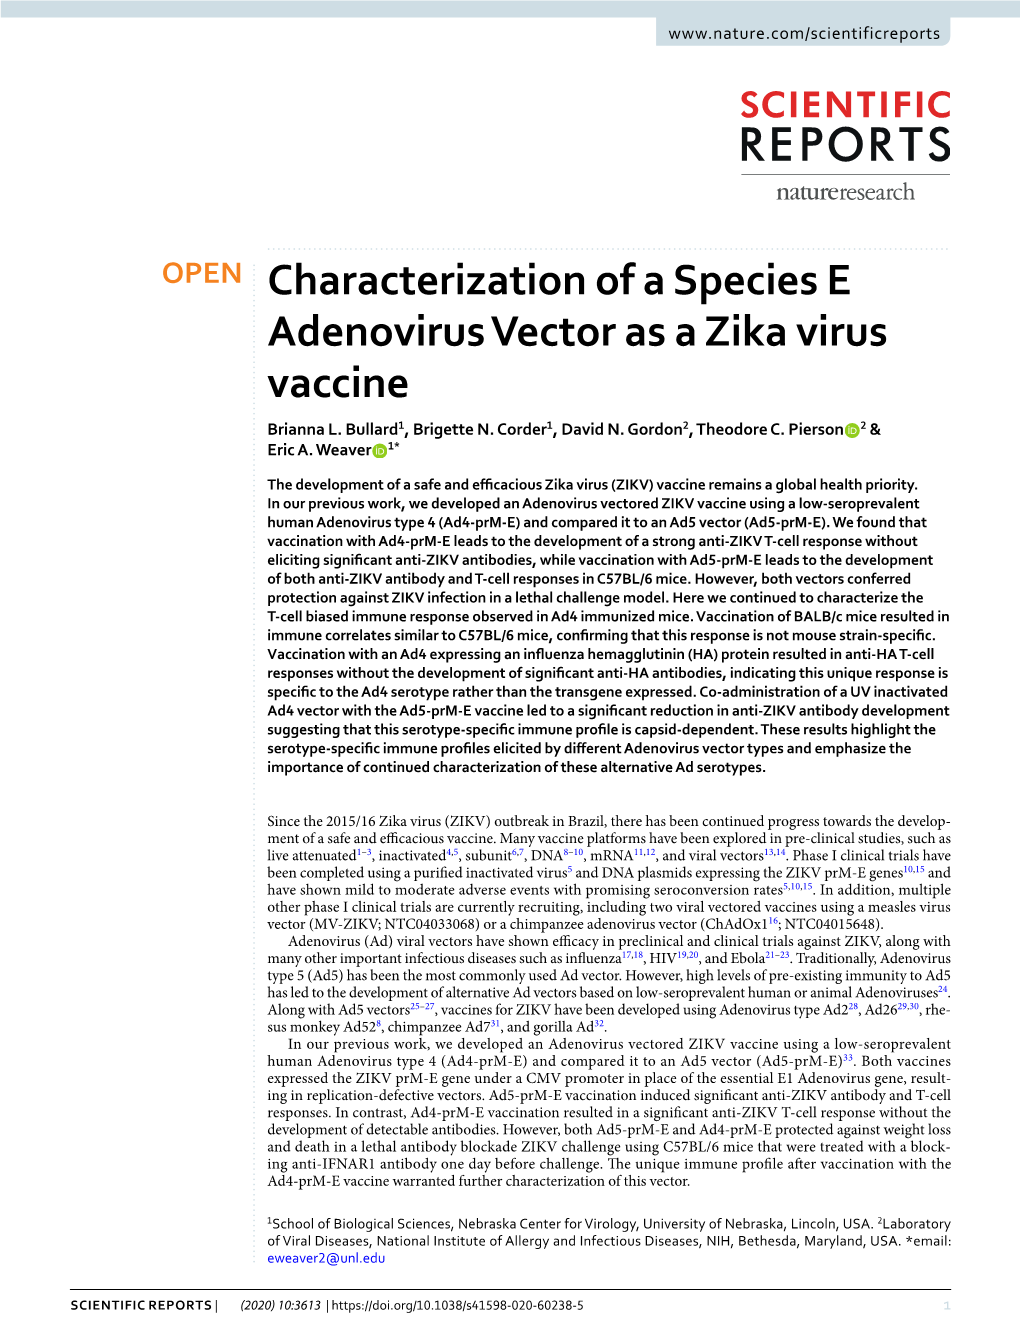 Characterization of a Species E Adenovirus Vector As a Zika Virus Vaccine Brianna L